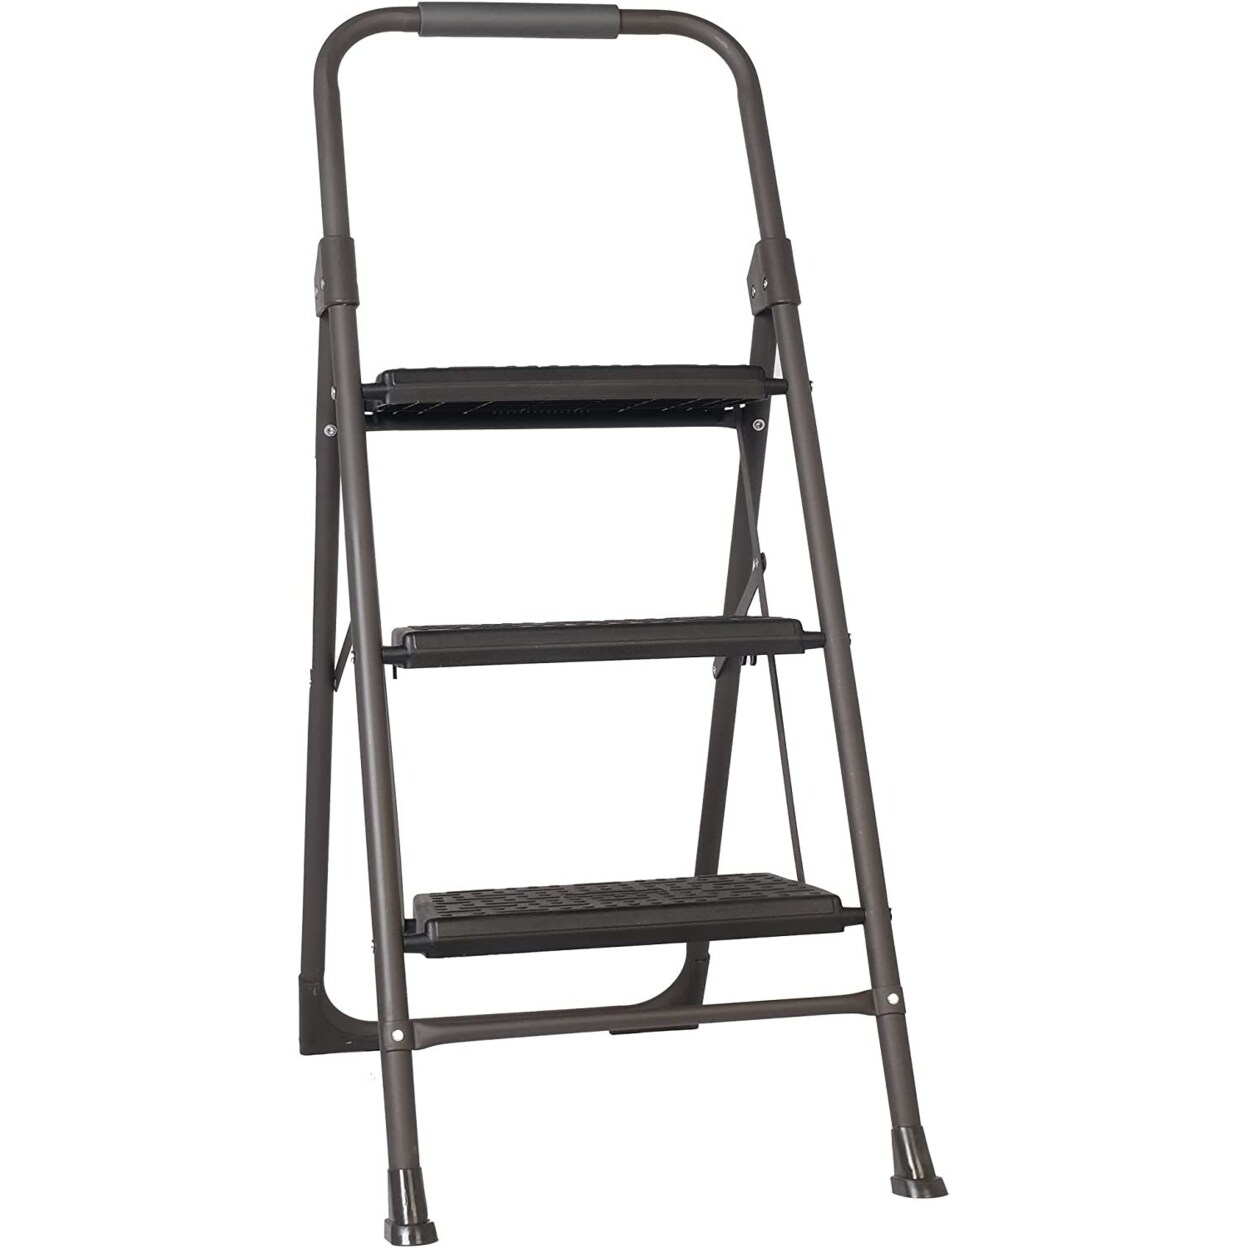 SKUSHOPS Step Ladder Folding Step Stool 3 Step Ladder with Wide Anti-Slip Pedal